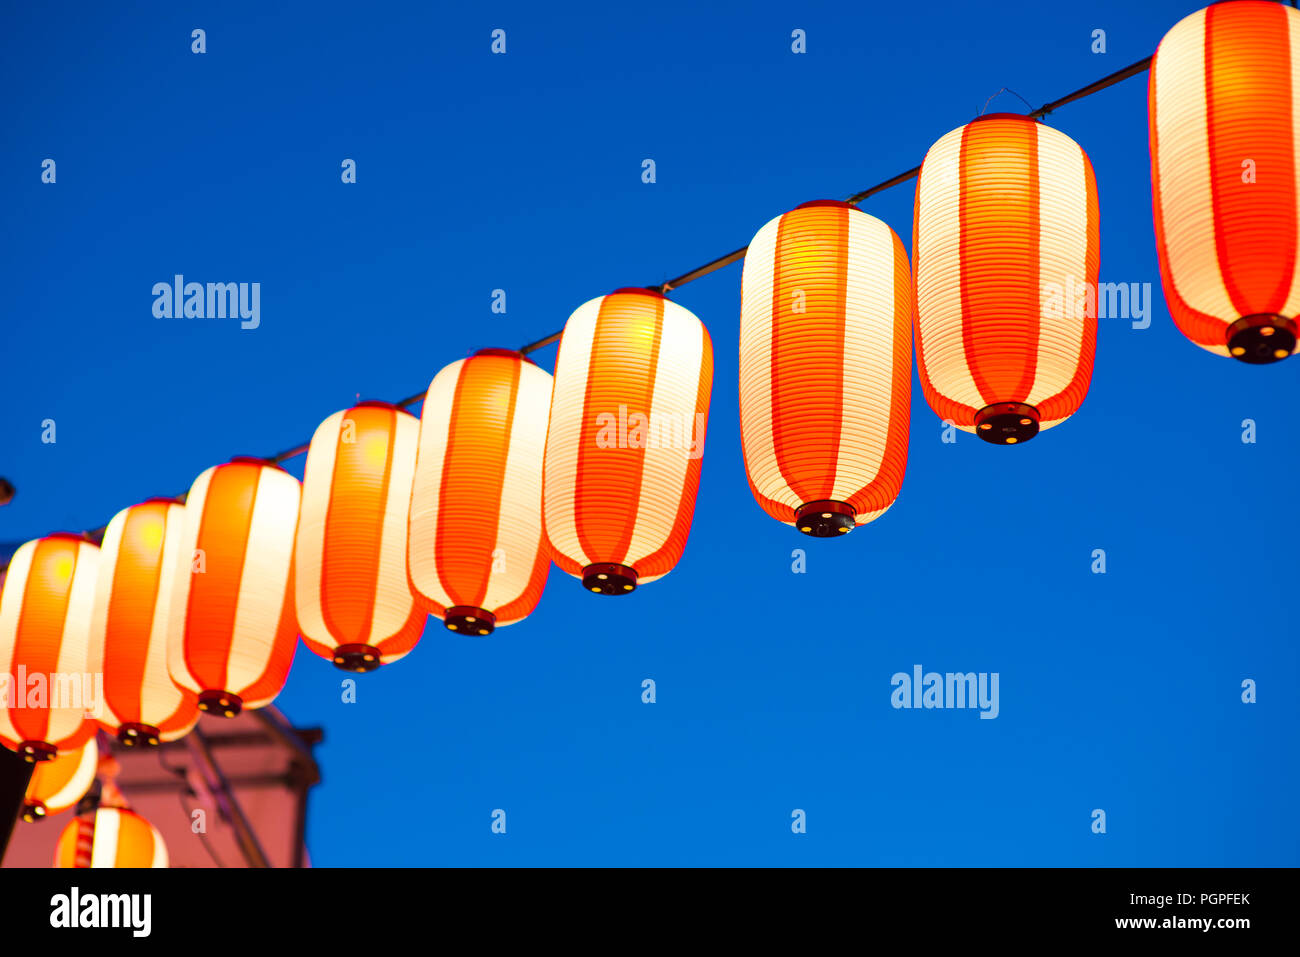 Chinese new year lanterns in china town Stock Photo